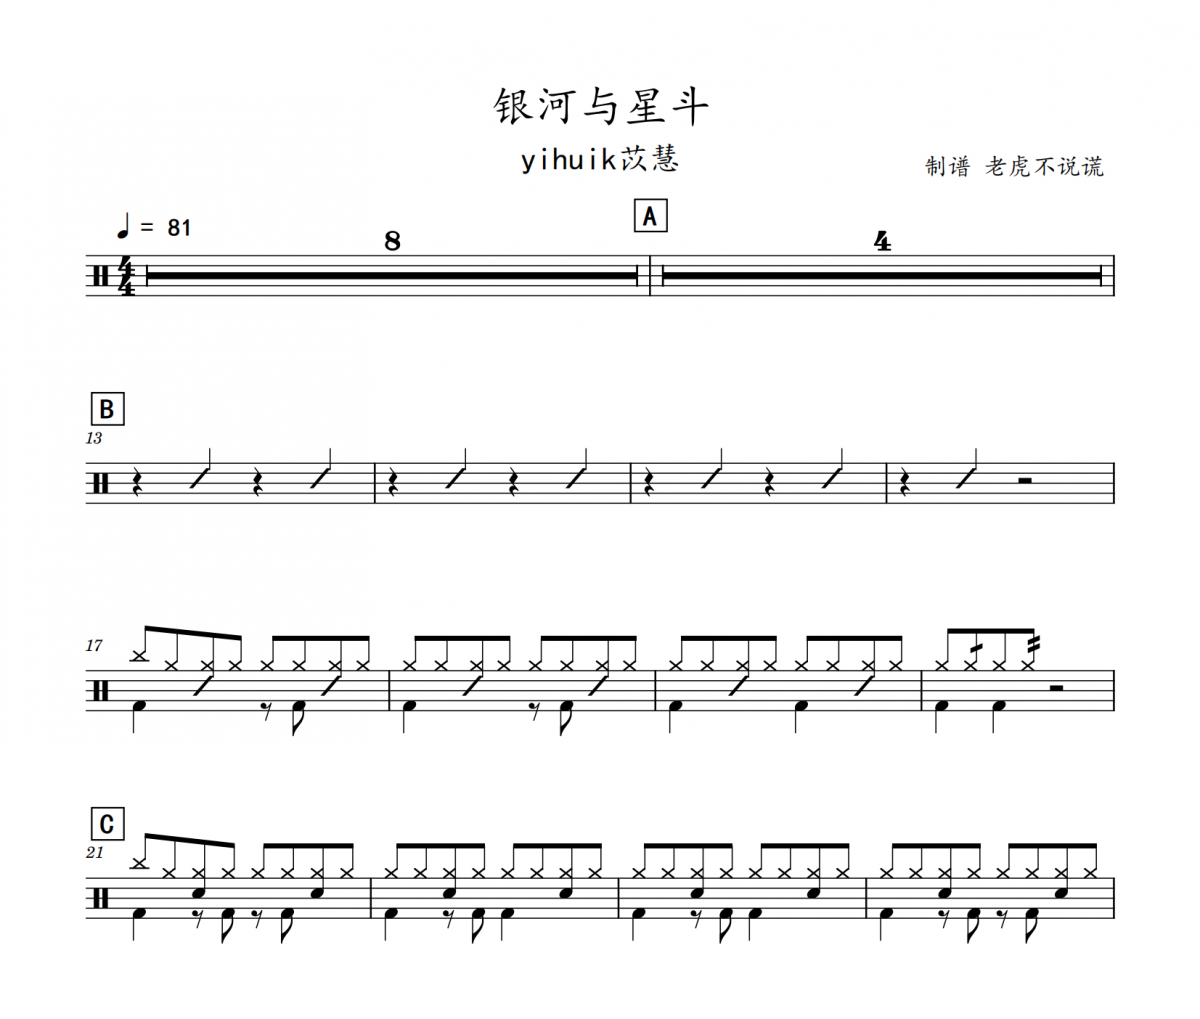 yihuik苡慧-银河与星斗（酷狗TOP500）架子鼓谱爵士鼓曲谱